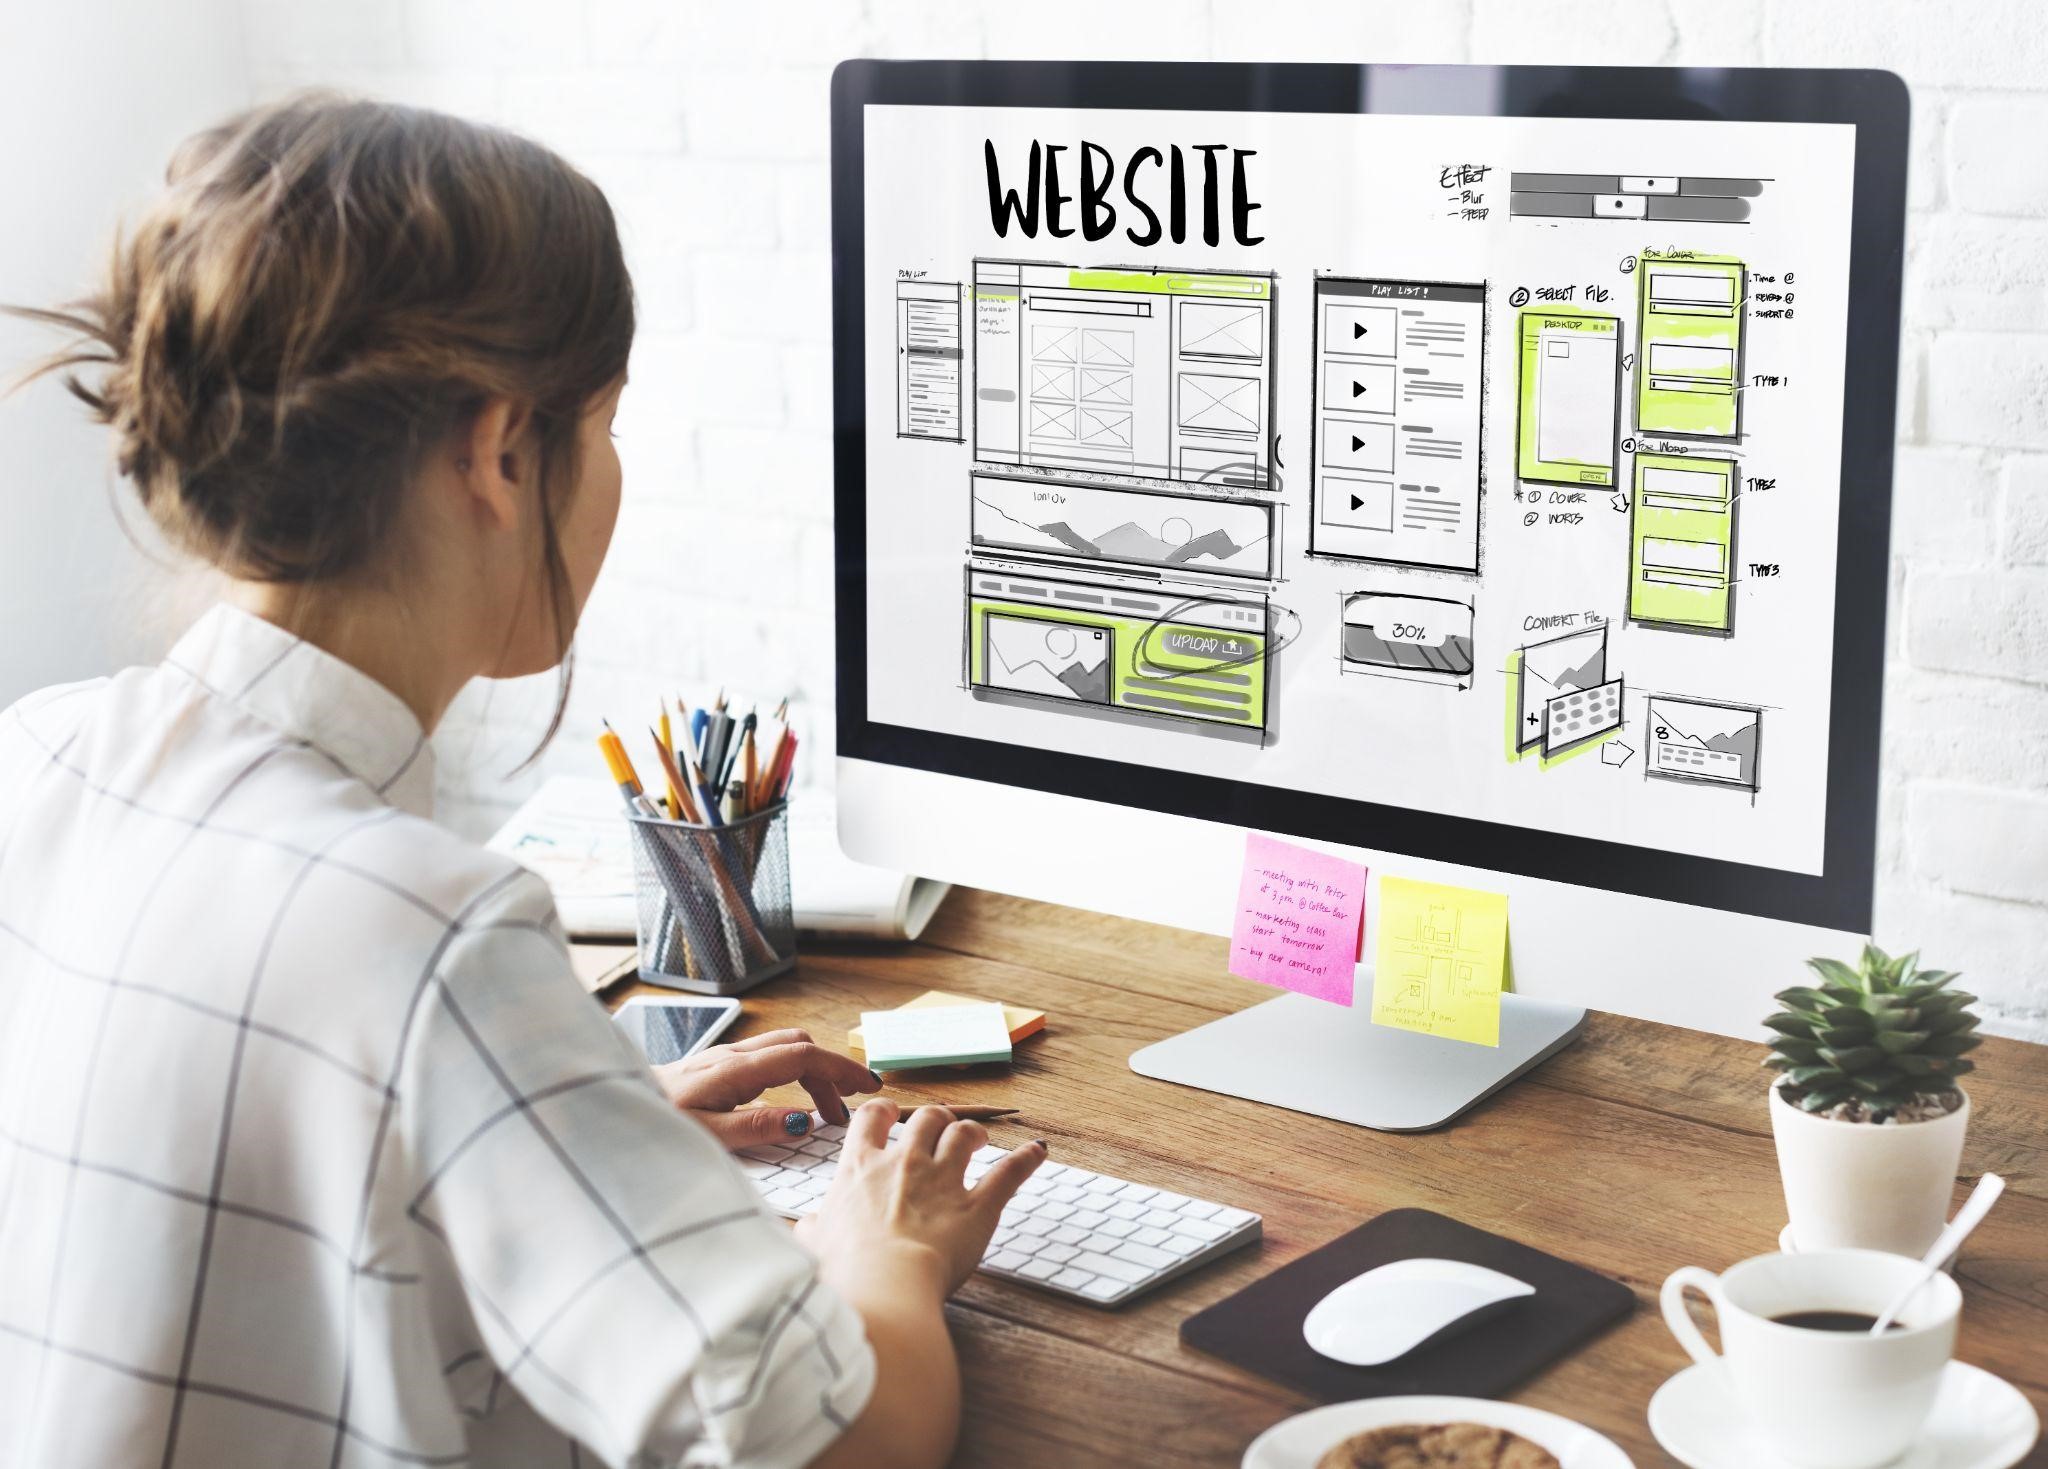 choosing a website design agency image